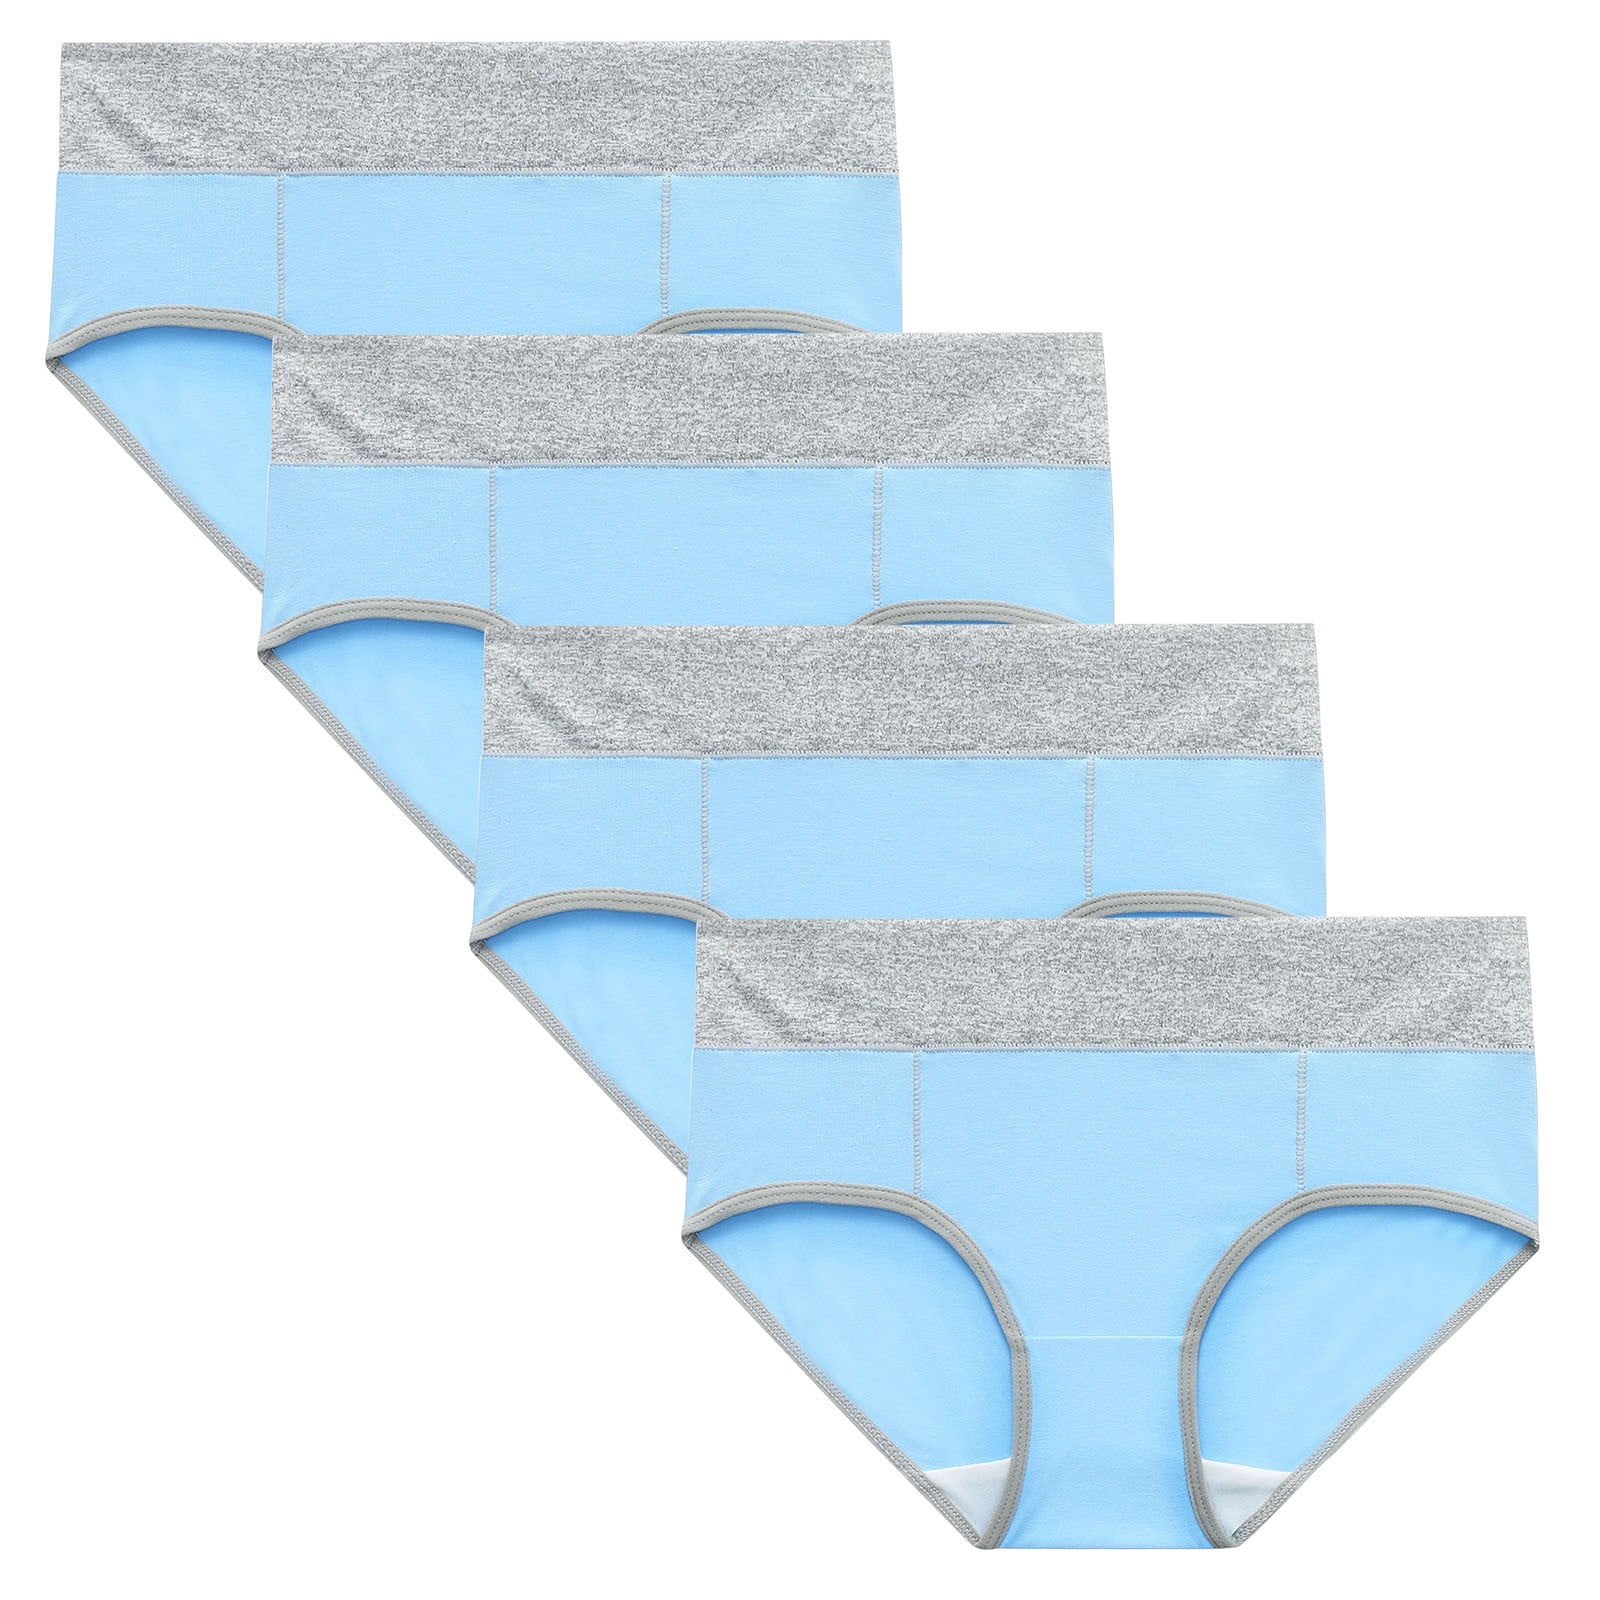 Details about   US 4PCS WomensLace G-string Briefs Panties Lingerie Bandage Underwear Thongs 